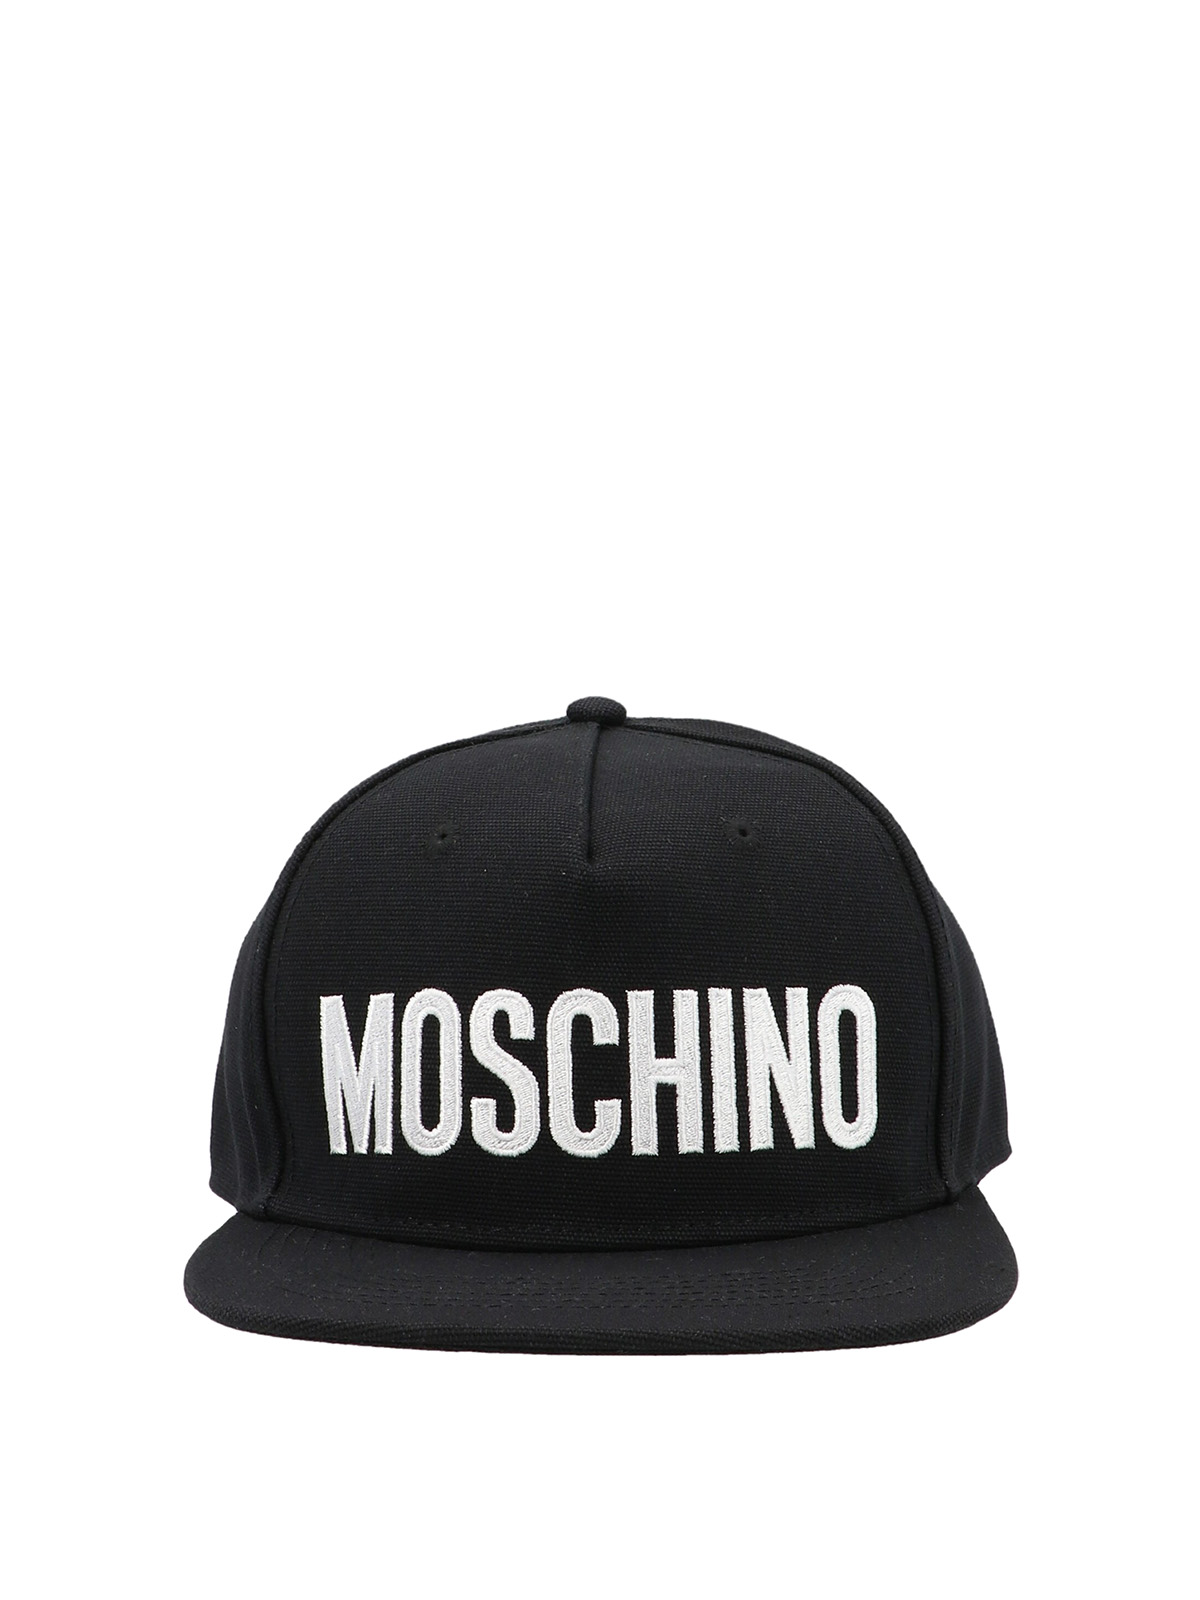 Moschino Label Cap In Black